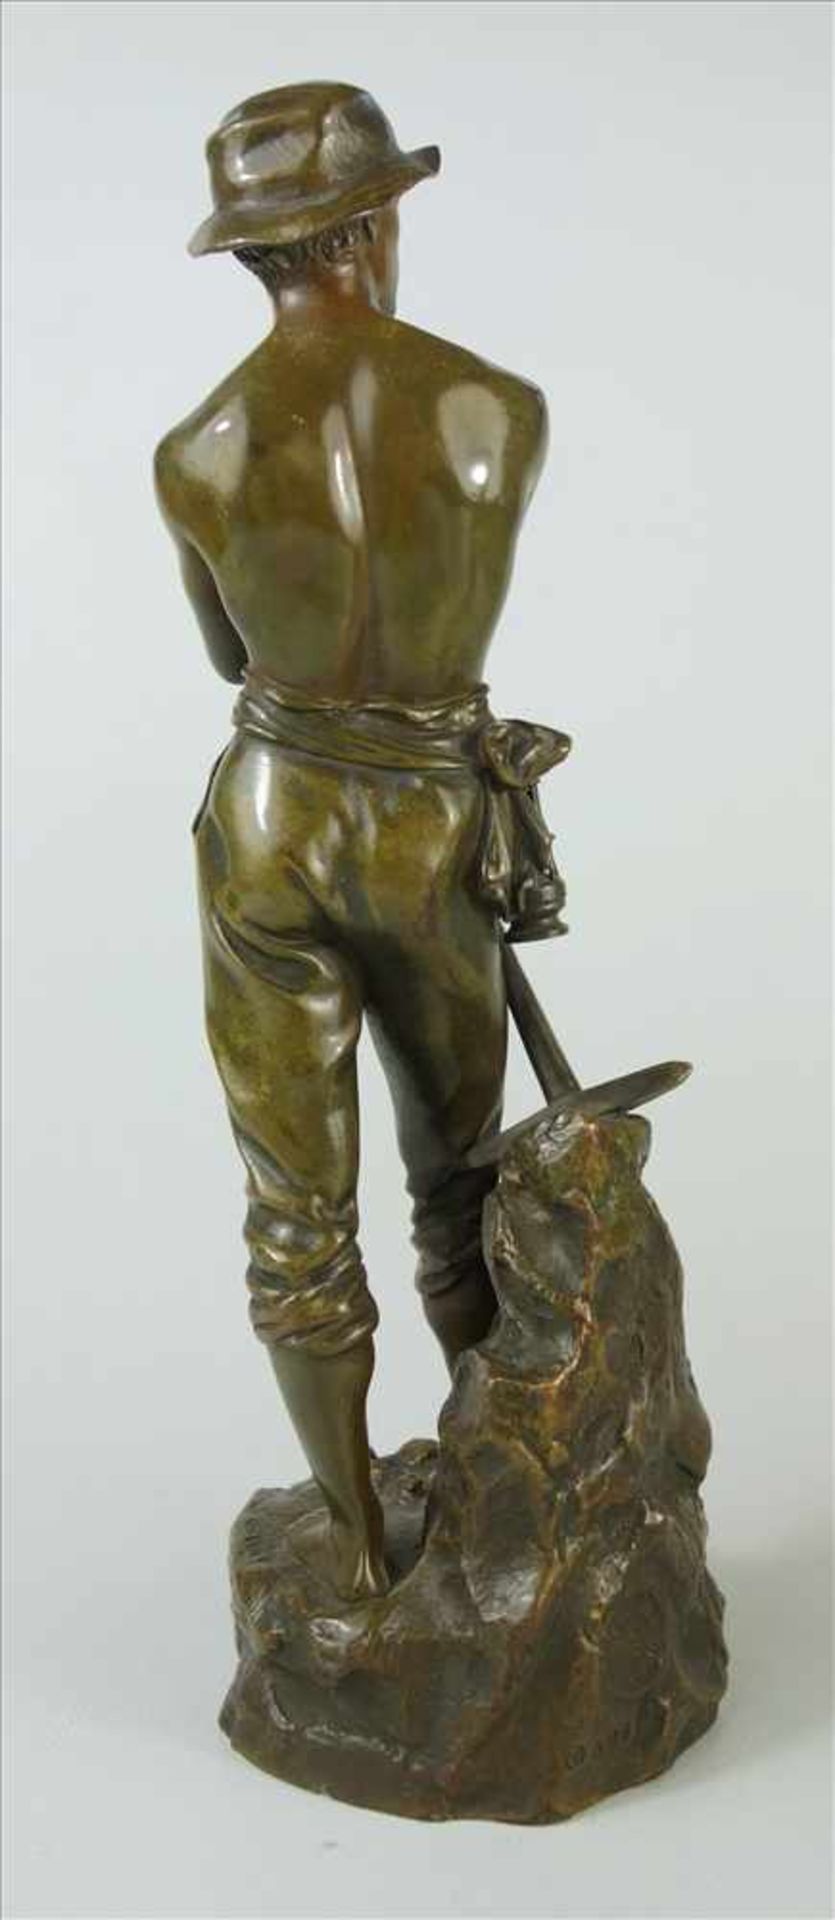 Charles Octave Levy (1820-1899 Paris) Le Mineur, um 1900, Bronze, stehender Bergbarbeiter mit - Image 2 of 4